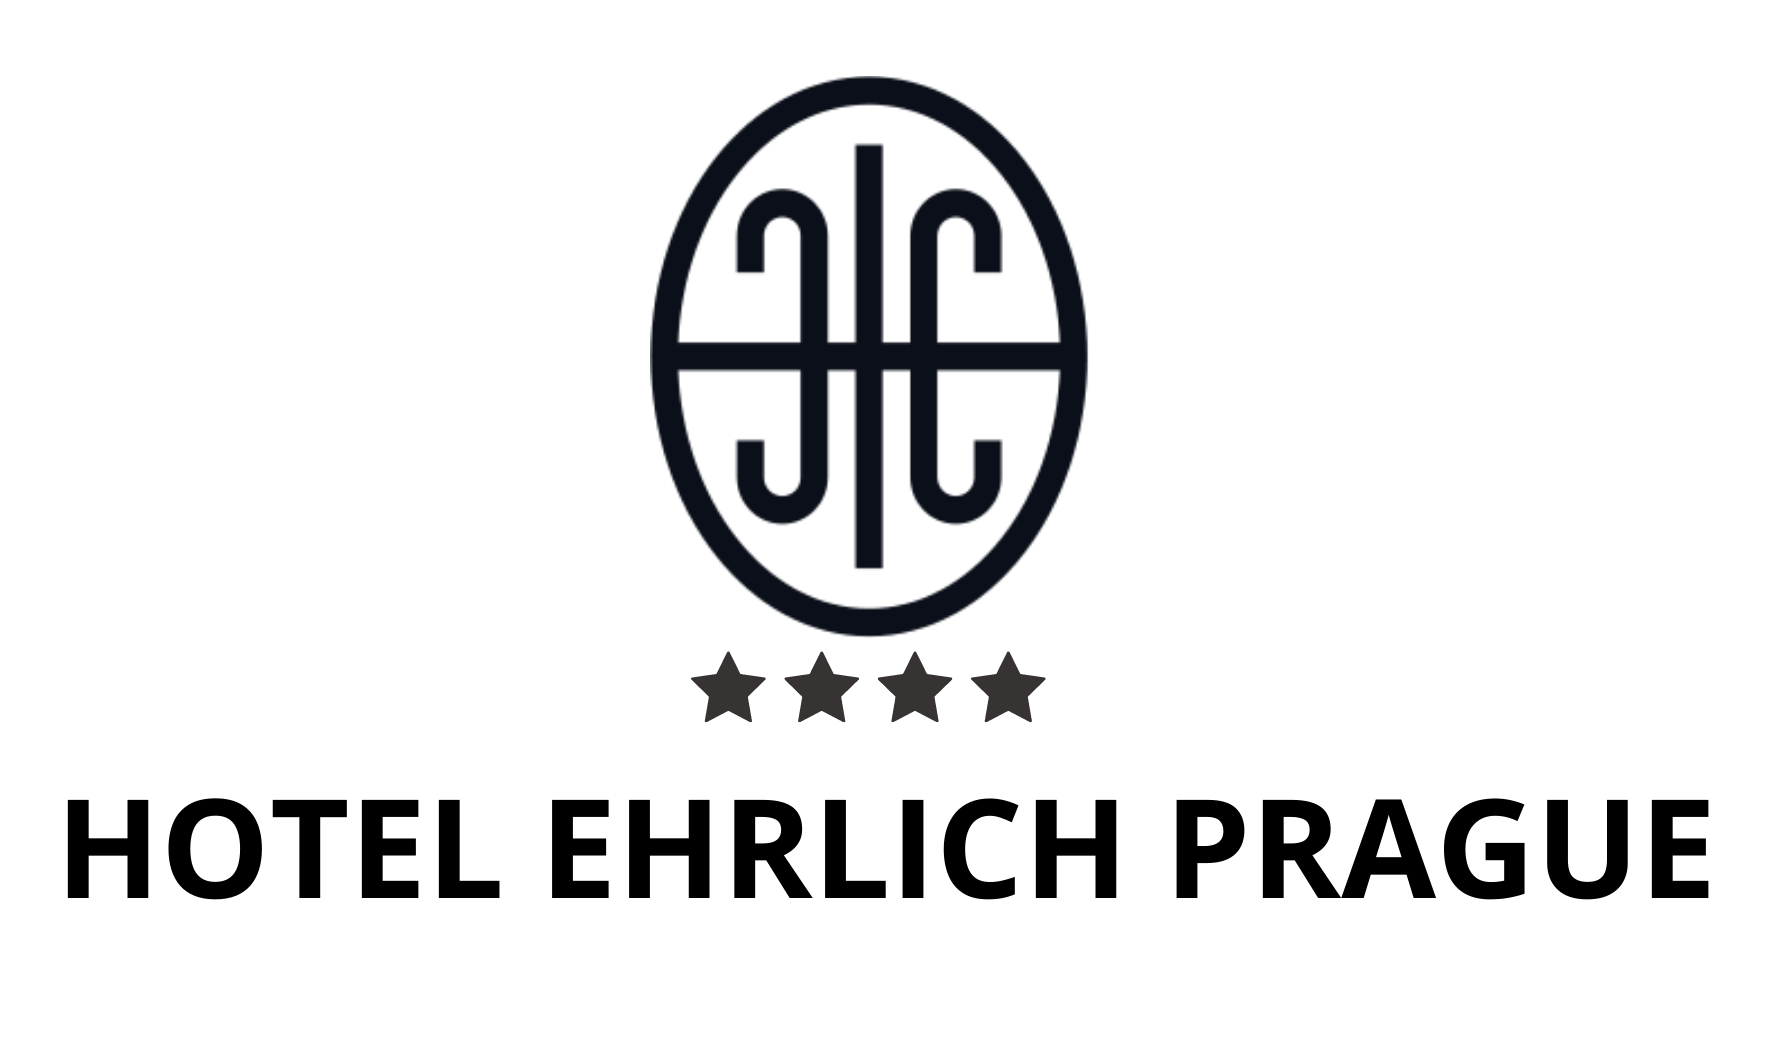 Hotel Ehrlich Prague - ОФИЦИАЛЬНЫЙ САЙТ